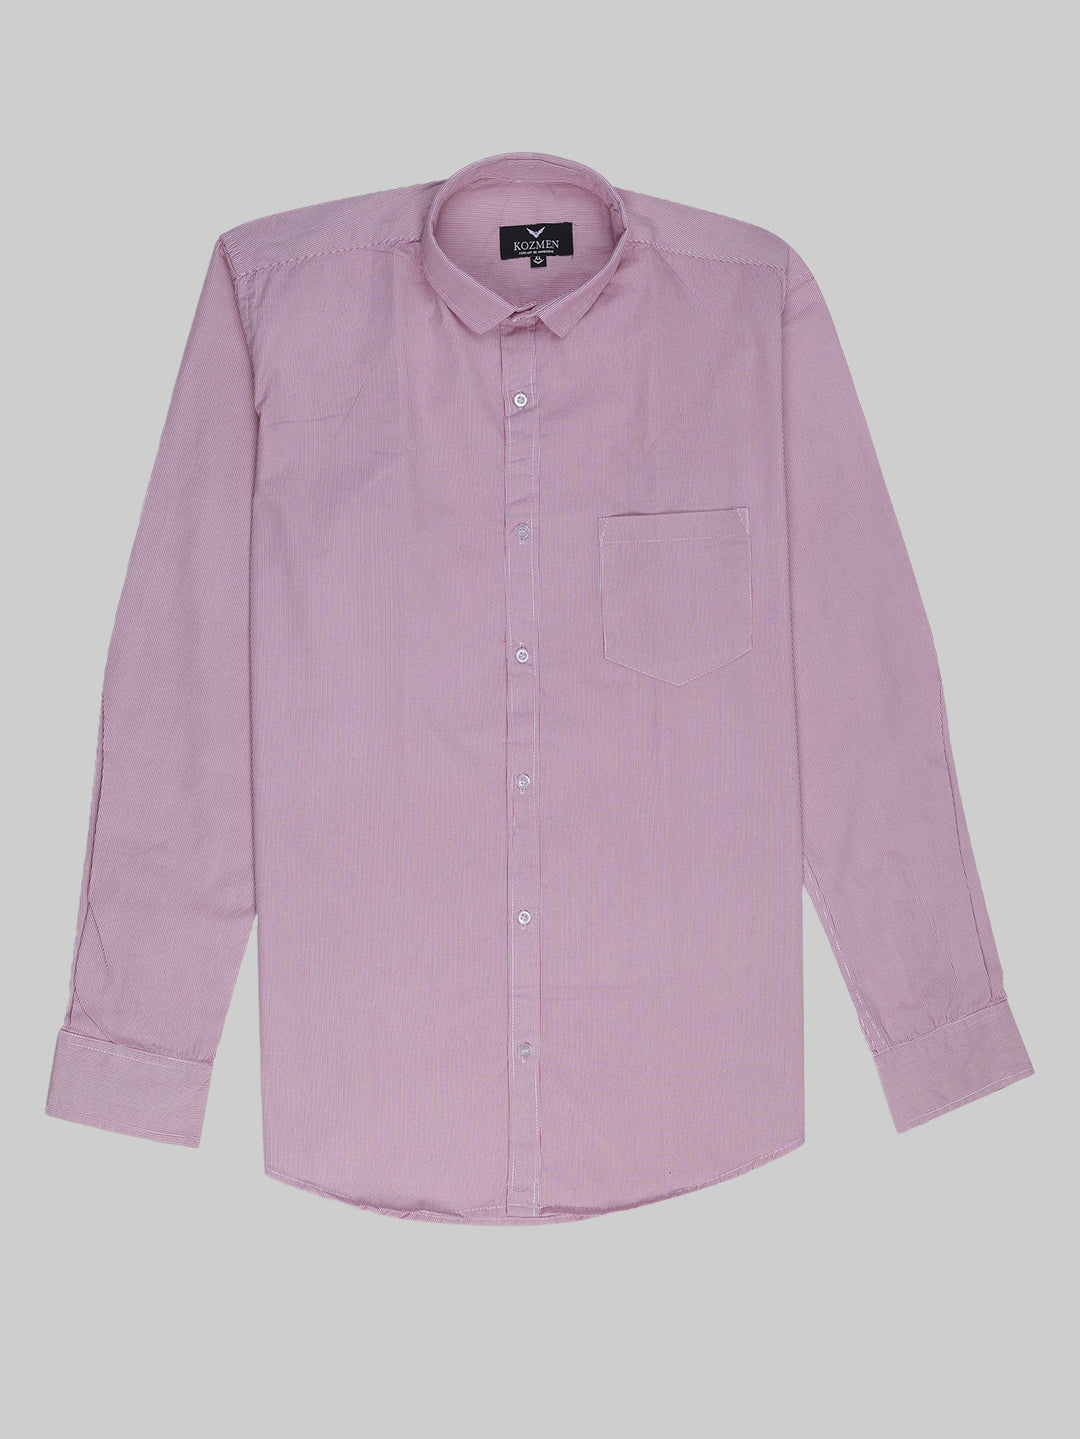 Kozmen Pink Plain Pure Cotton Shirt, Casual, Full Sleeves at Rs